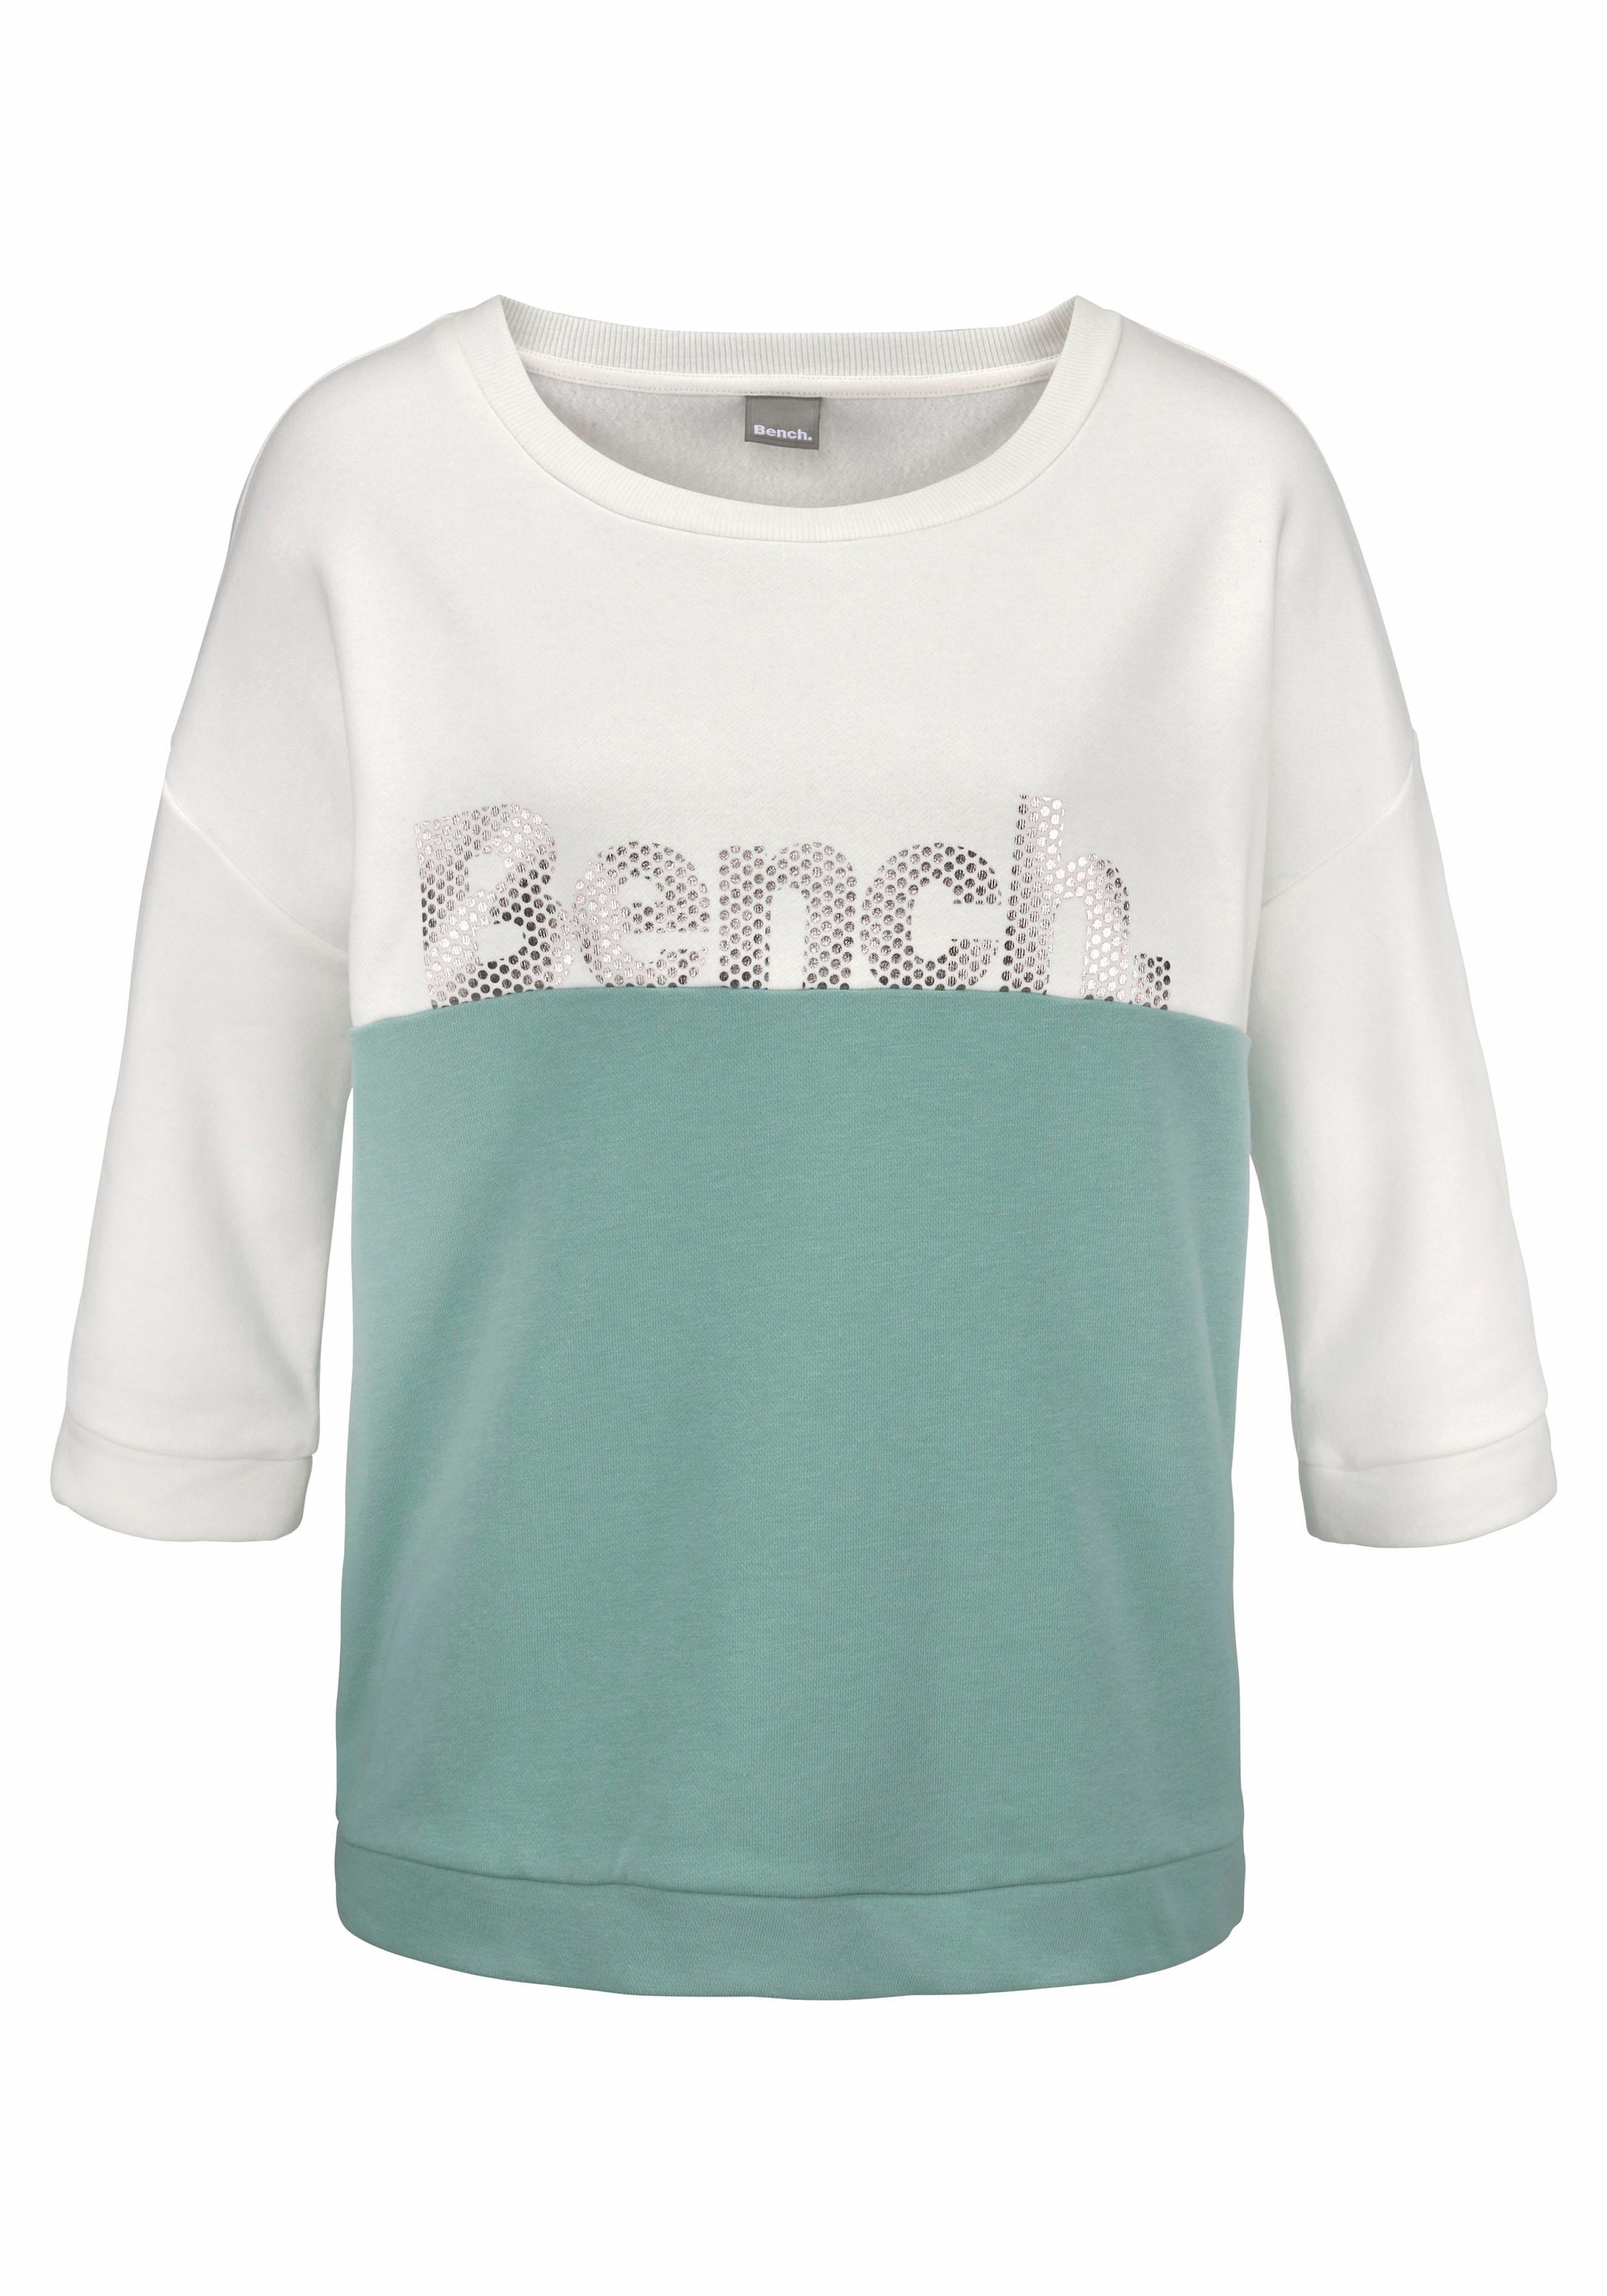 Bench. Sweatshirt, im Colorblocking Loungeanzug Design, shoppen Loungewear